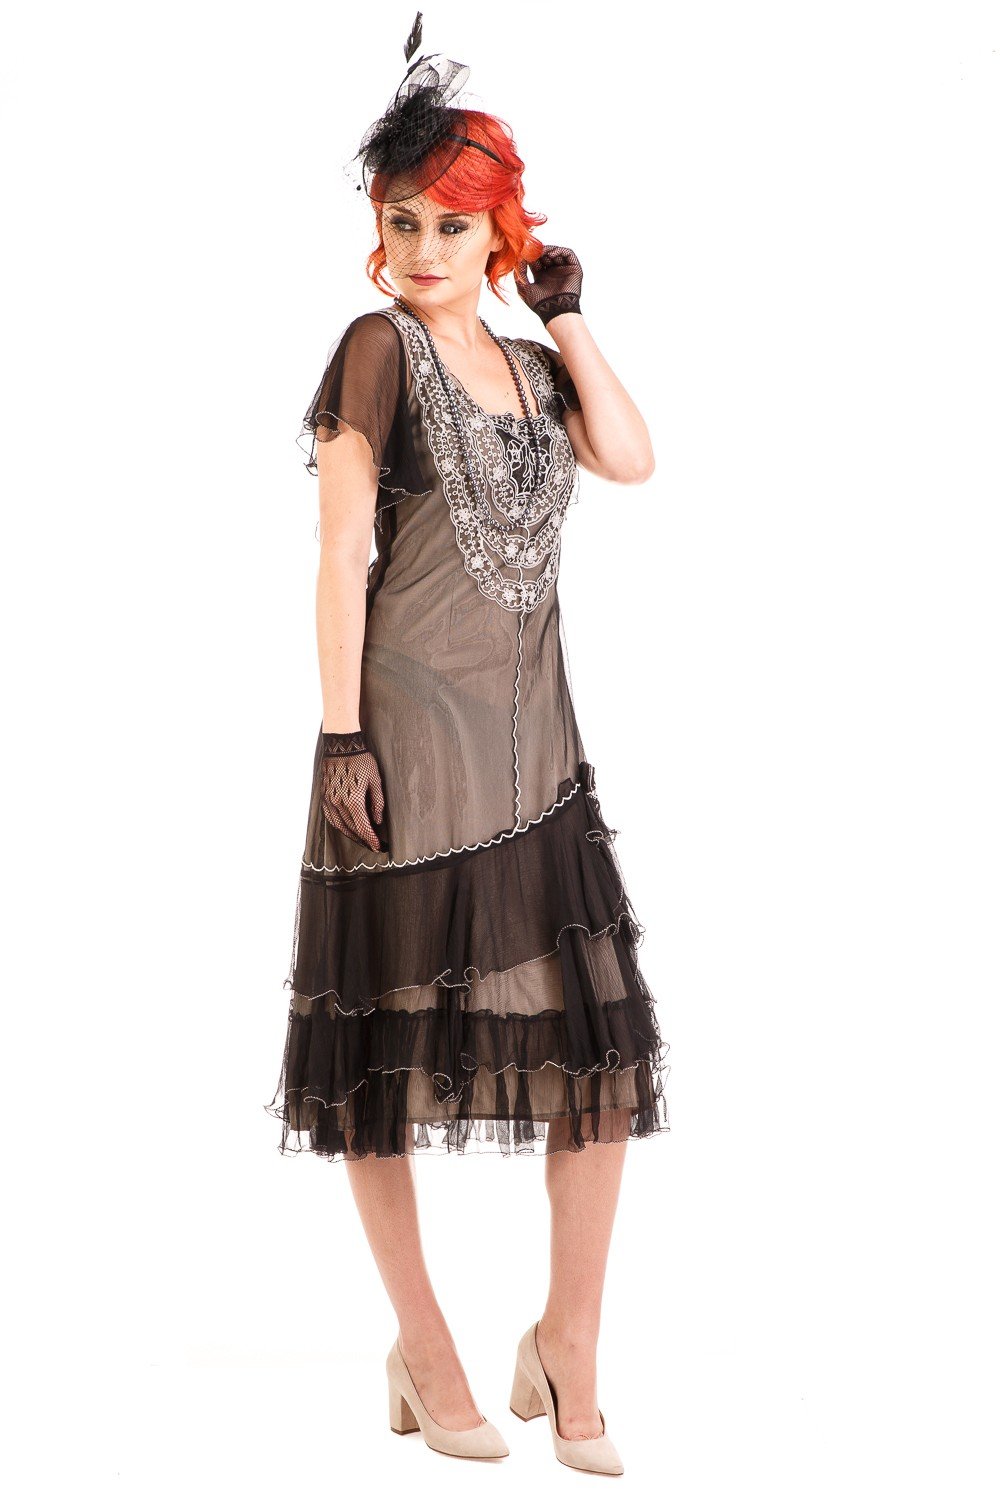 Alexa 1920s Flapper Style Dress AL-283 in Black-Silver by Nataya